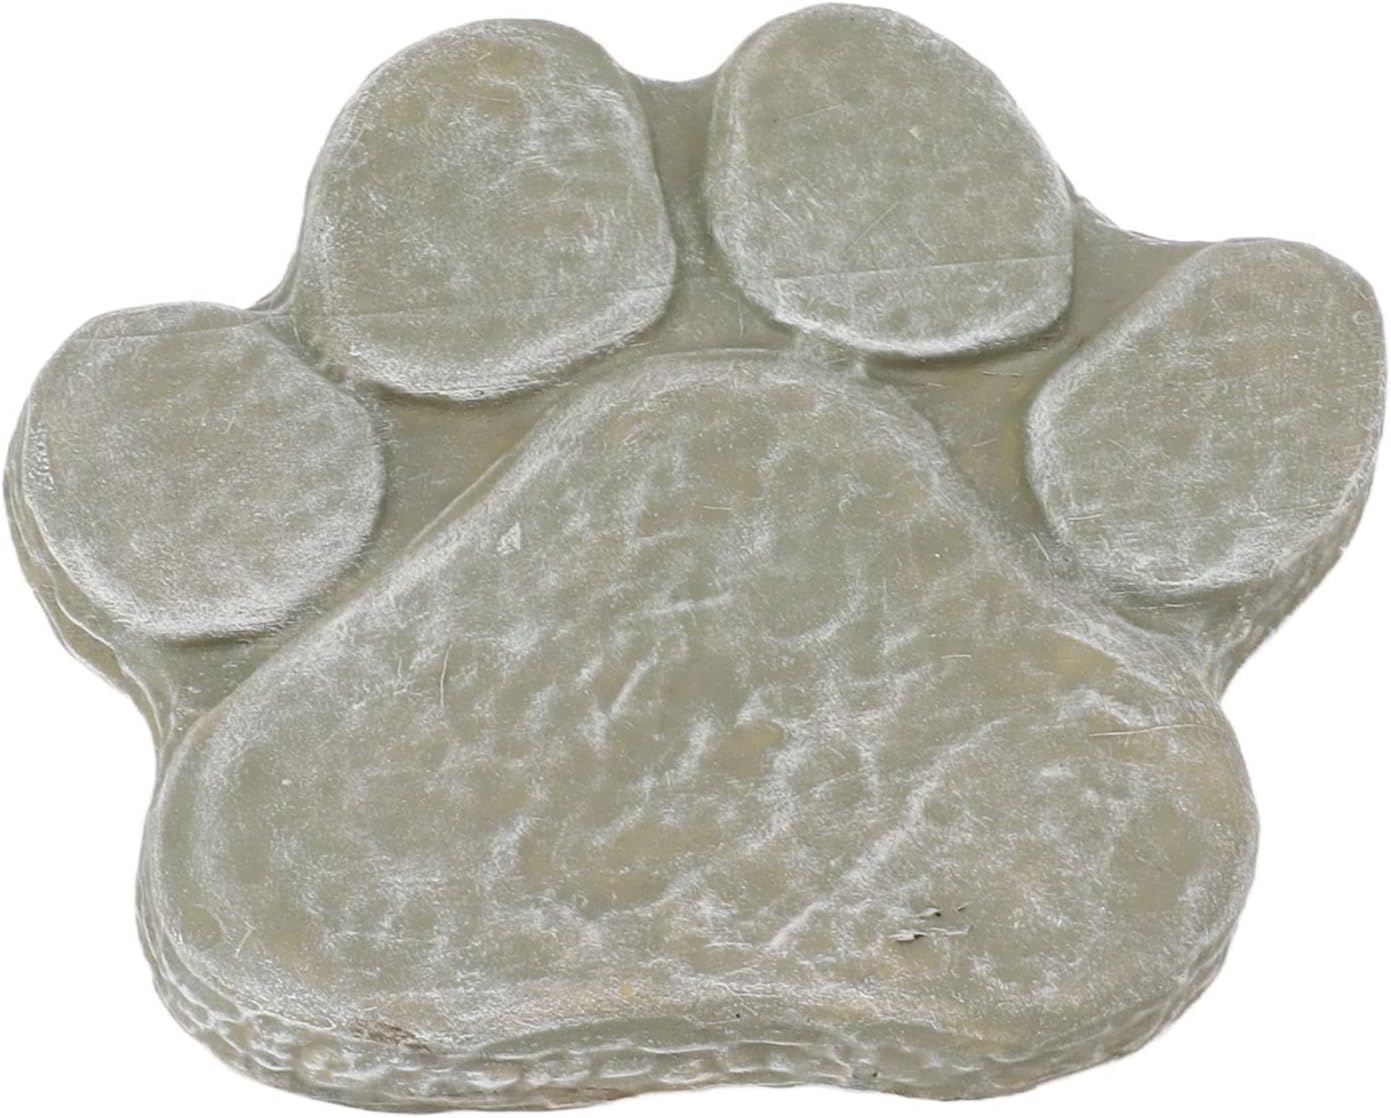 Diy Lettrage Dog Grave Marker Personnalisé Diy Pet Memorial Stone Marker Pet Supplies Pet Memorial Garden Stone For Outdoor Lawn Patio (Vert Moussu)